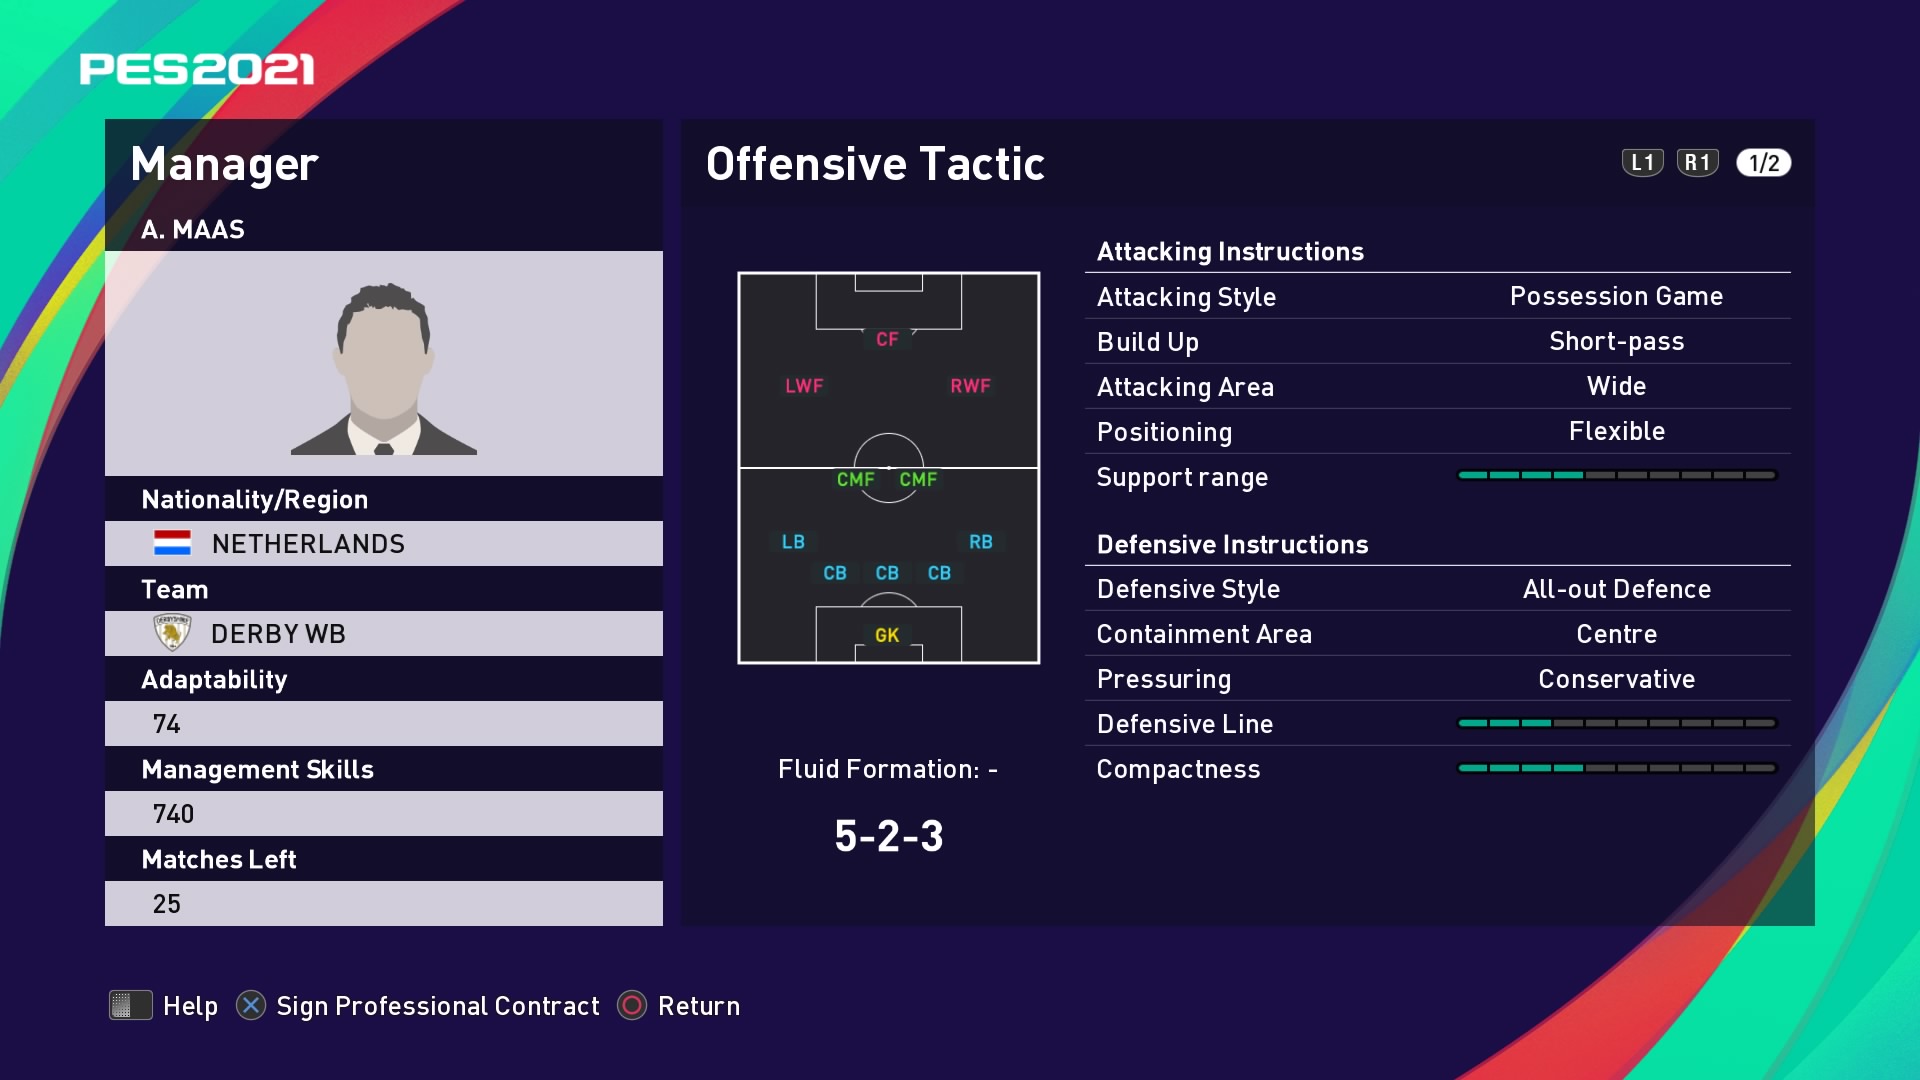 A. Maas (Phillip Cocu) Offensive Tactic in PES 2021 myClub